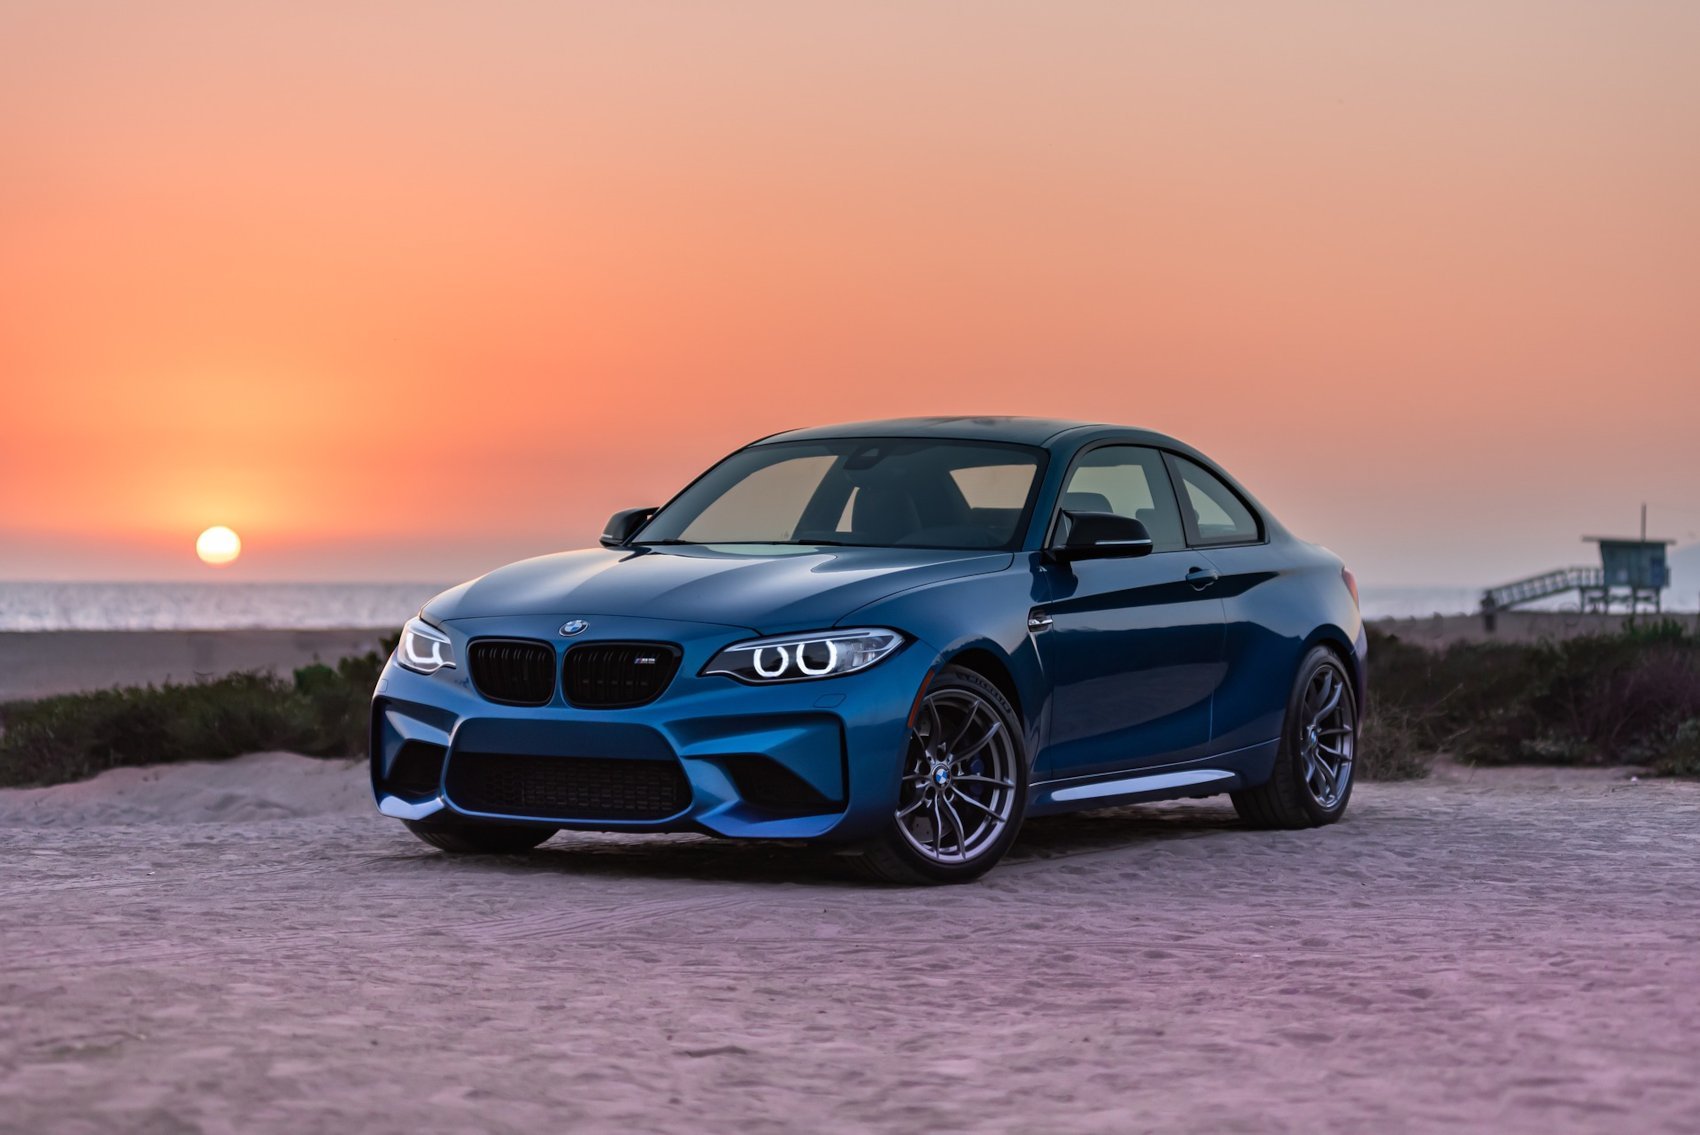 BMW Sports Car - Image by Tyler Clemmensen